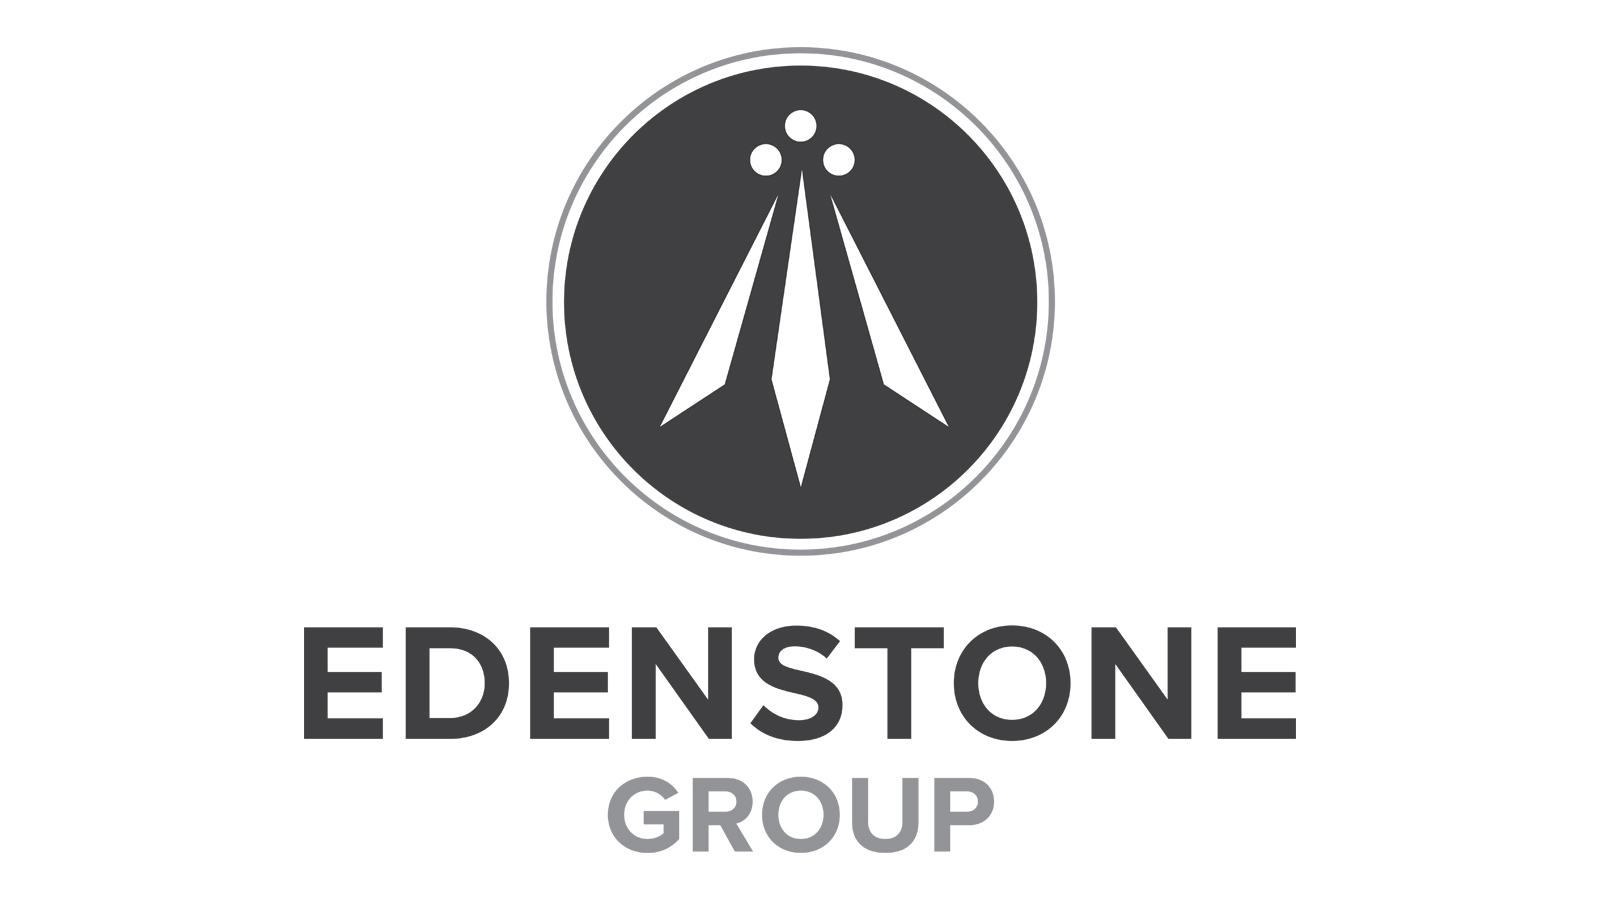 The Edenstone Group